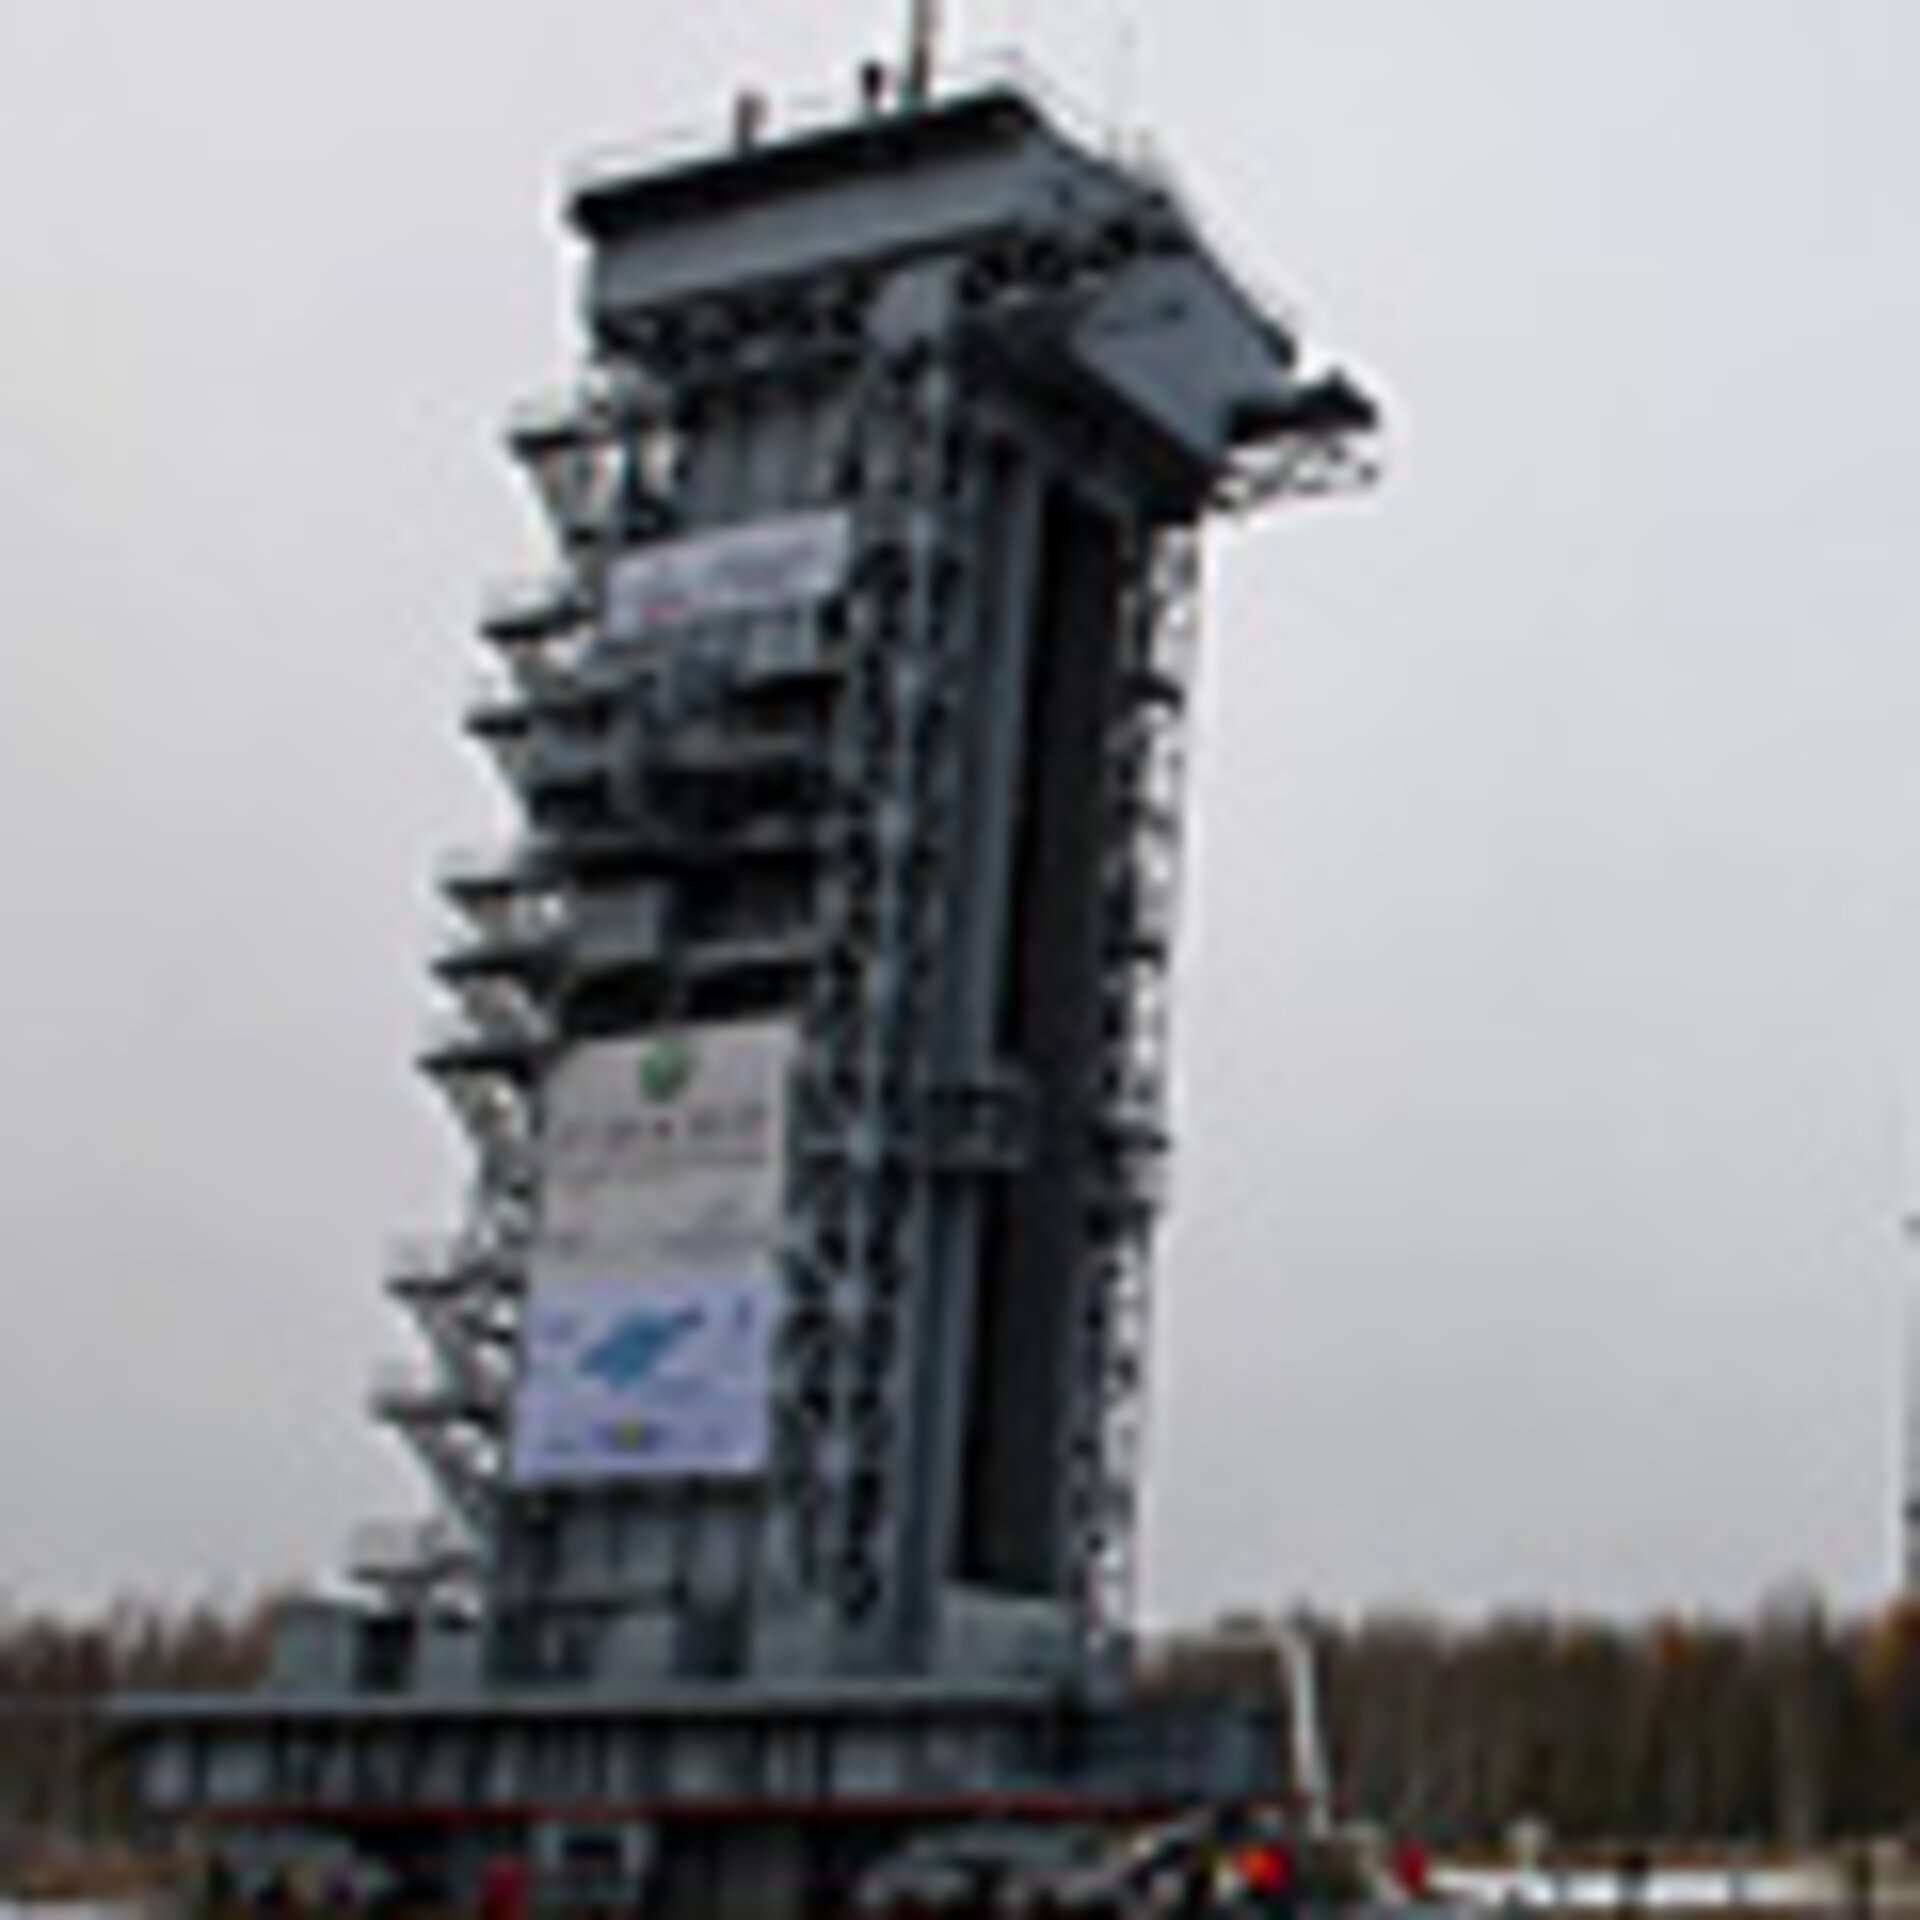 SMOS Proba-2 launch tower